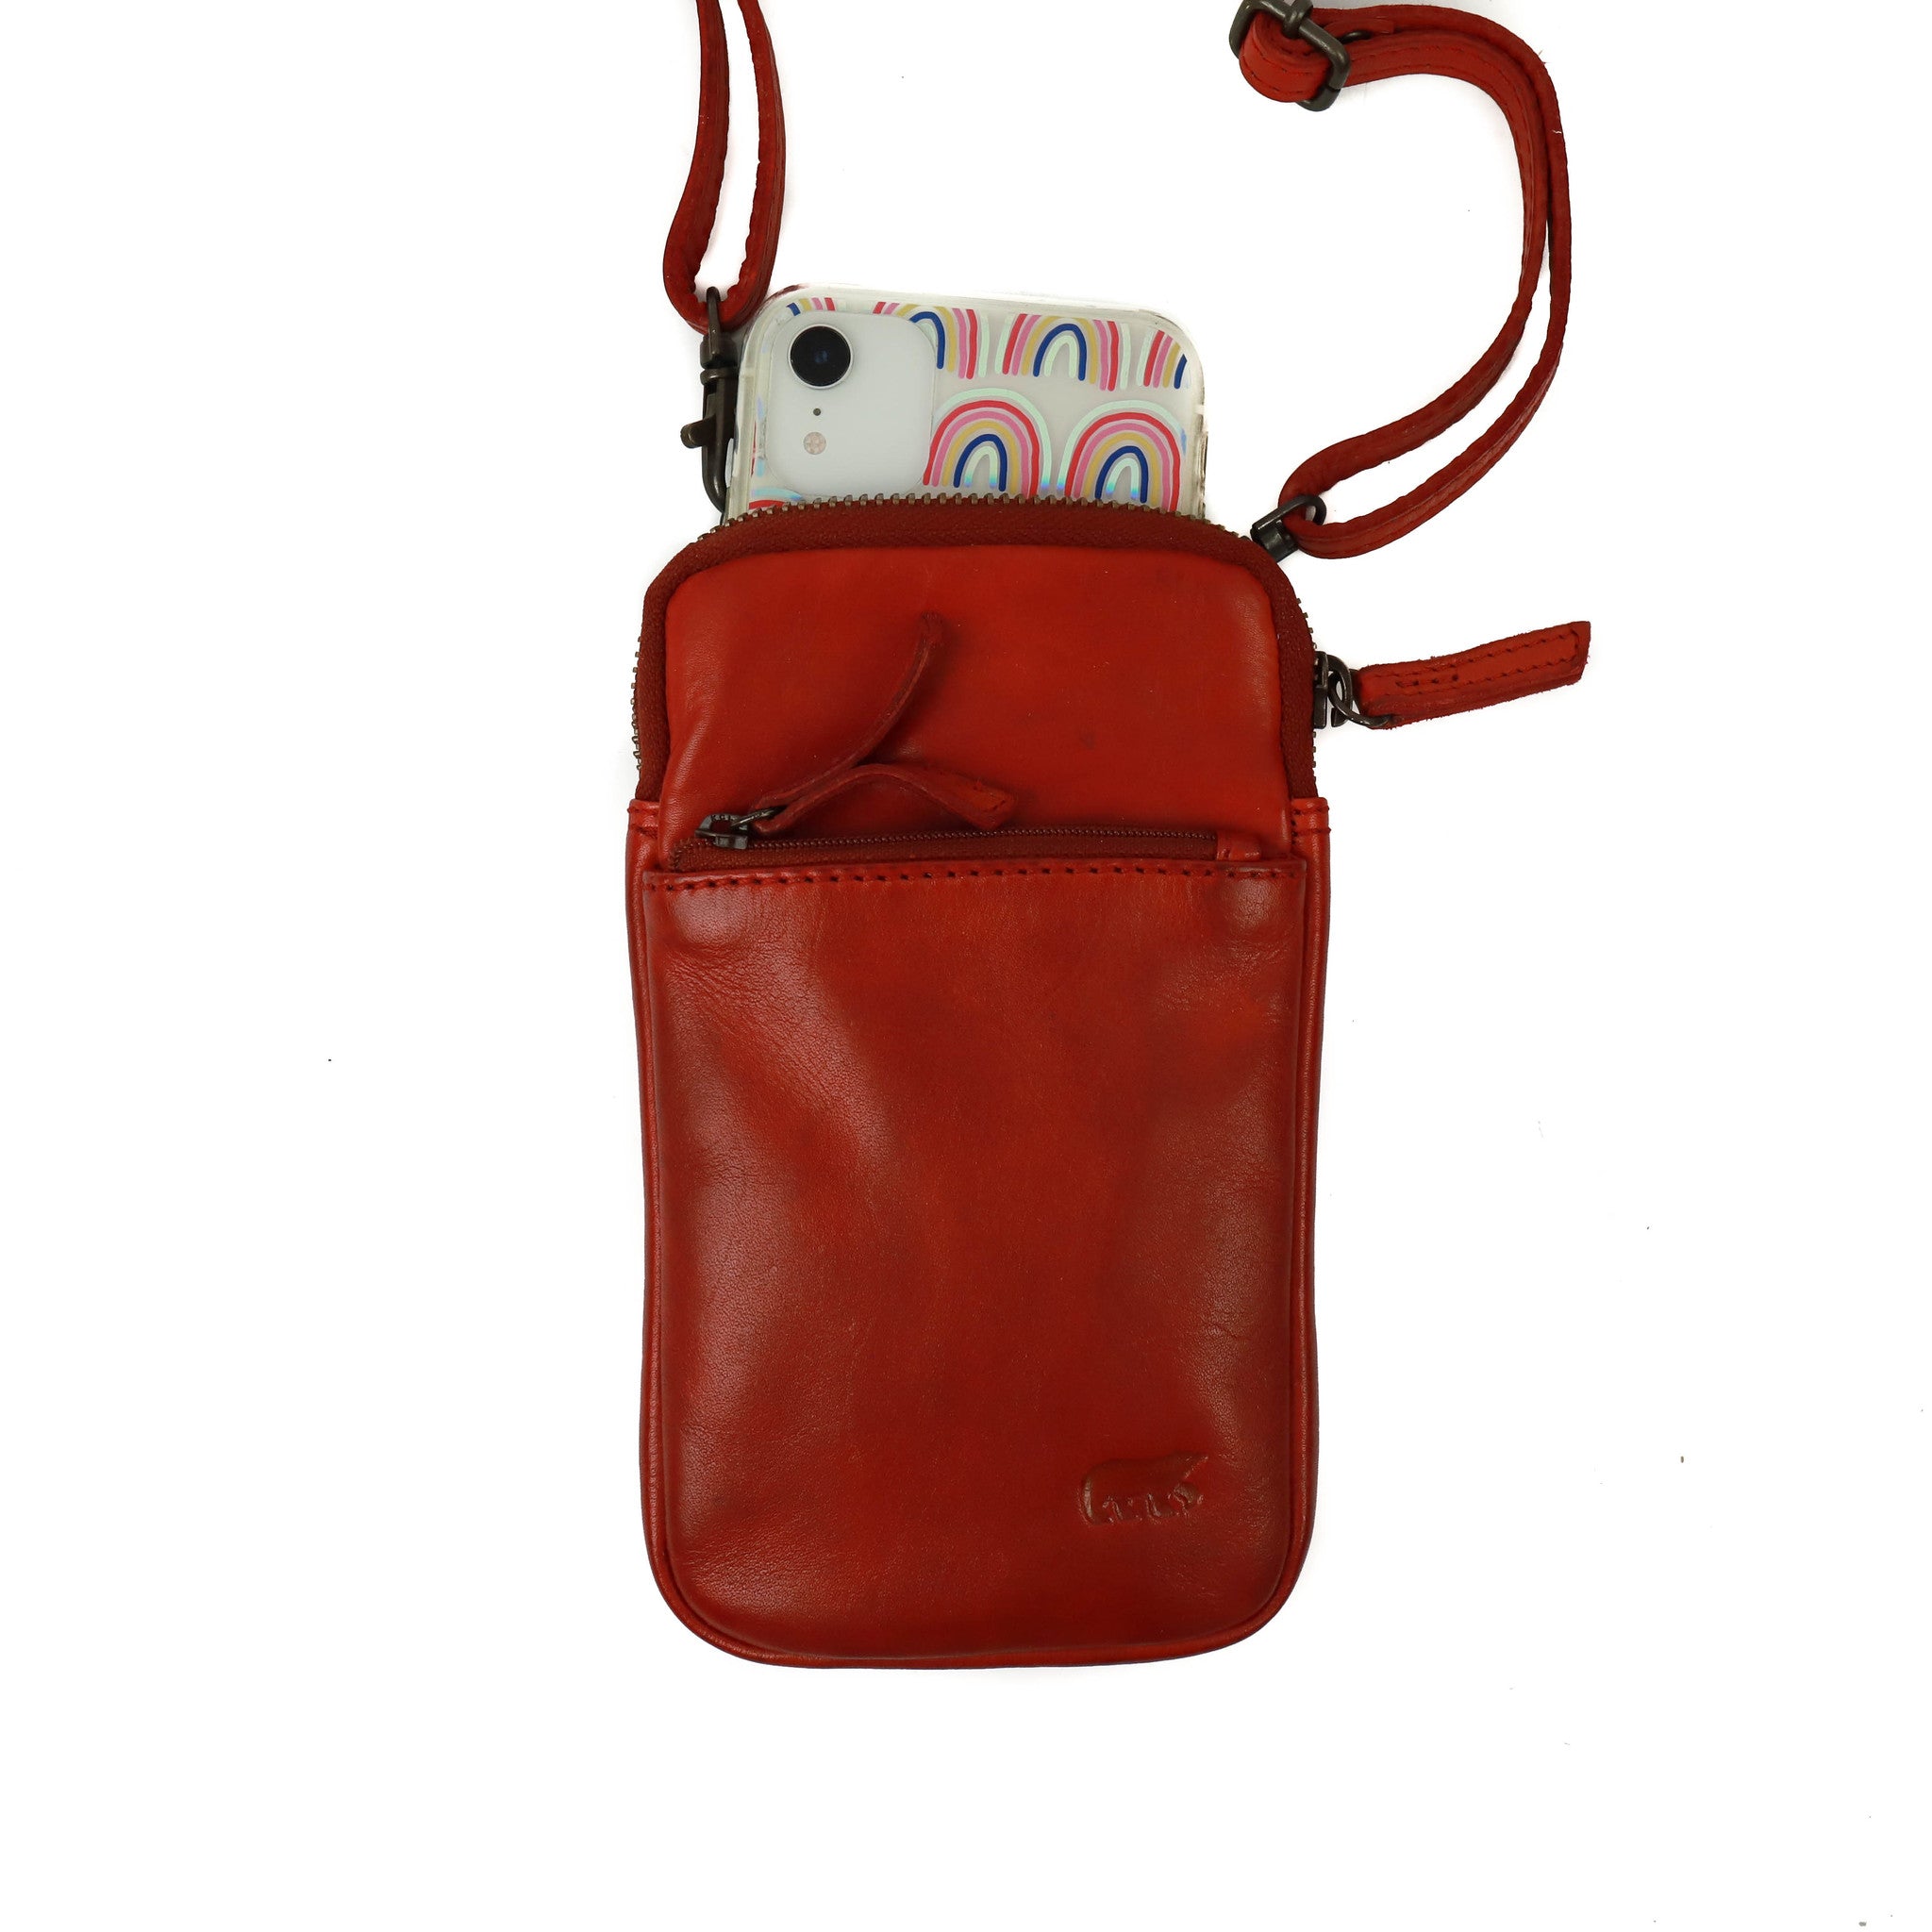 Phone bag 'Sammy' red - CL 41862